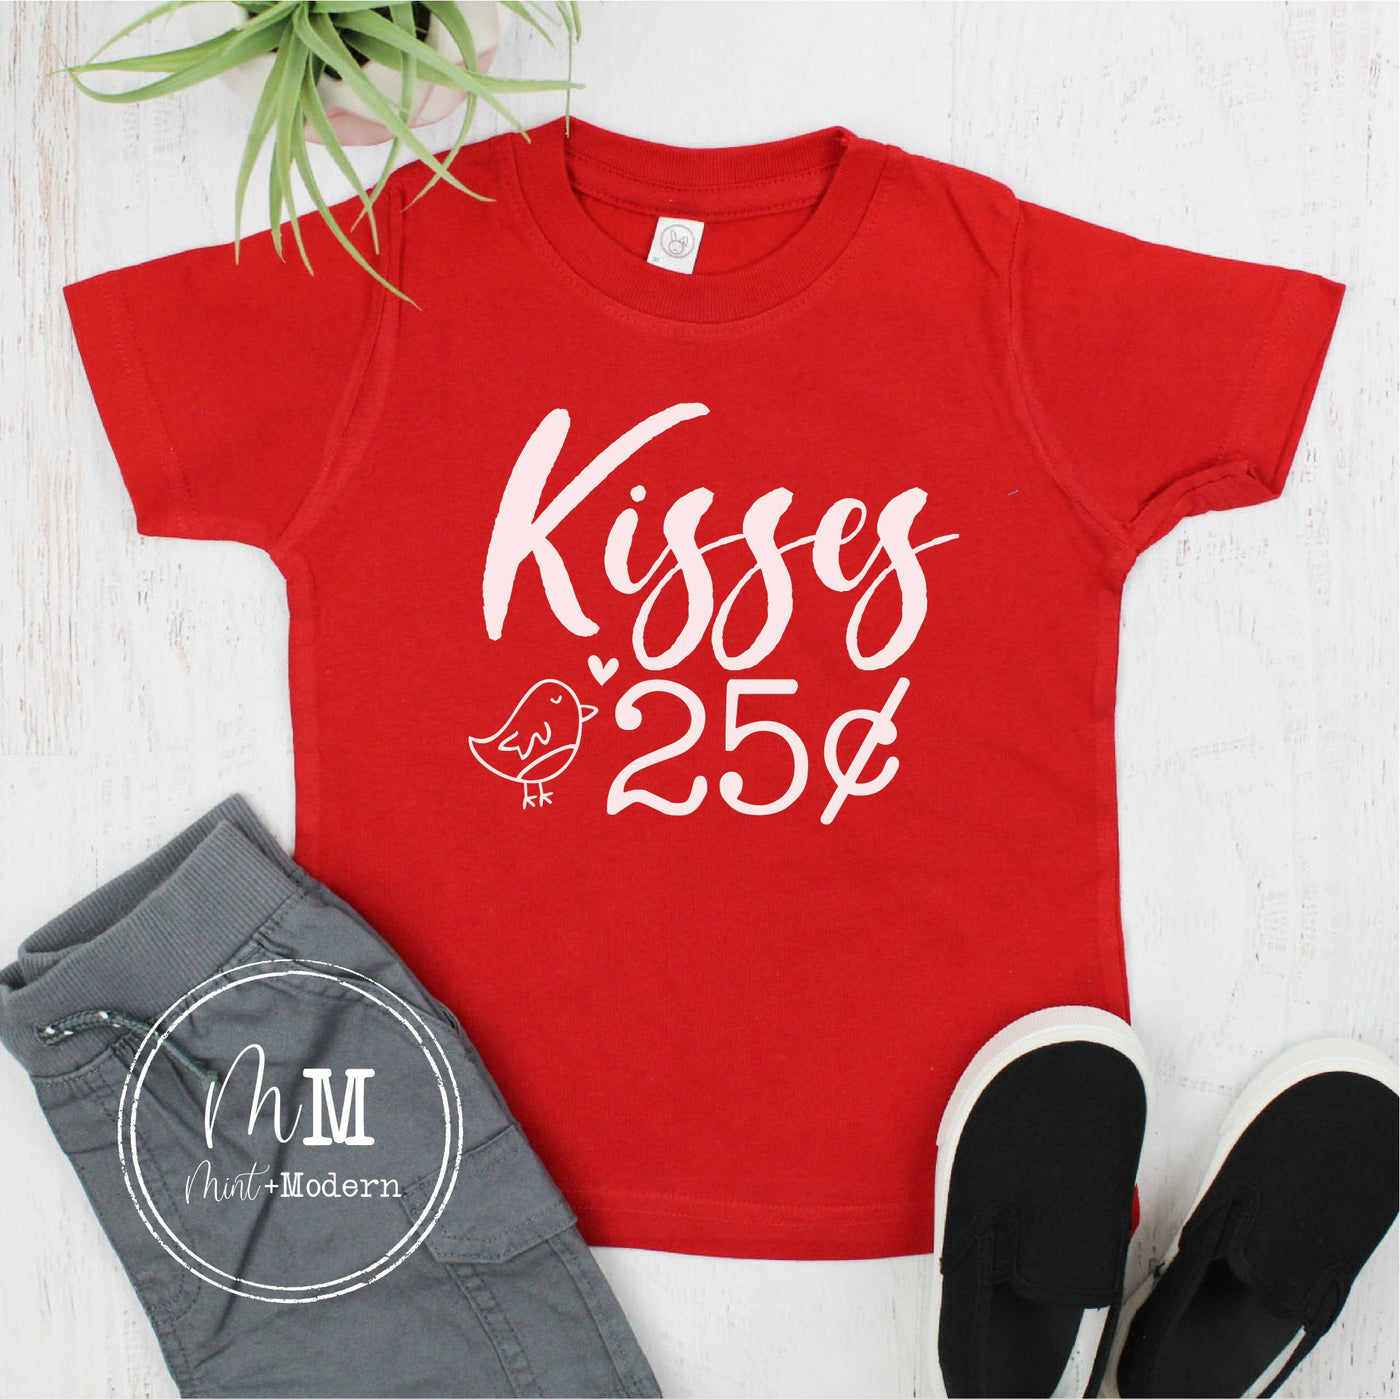 Kisses 25 Cents Valentine's Day Shirt - Toddler Valentine's Day Shirt